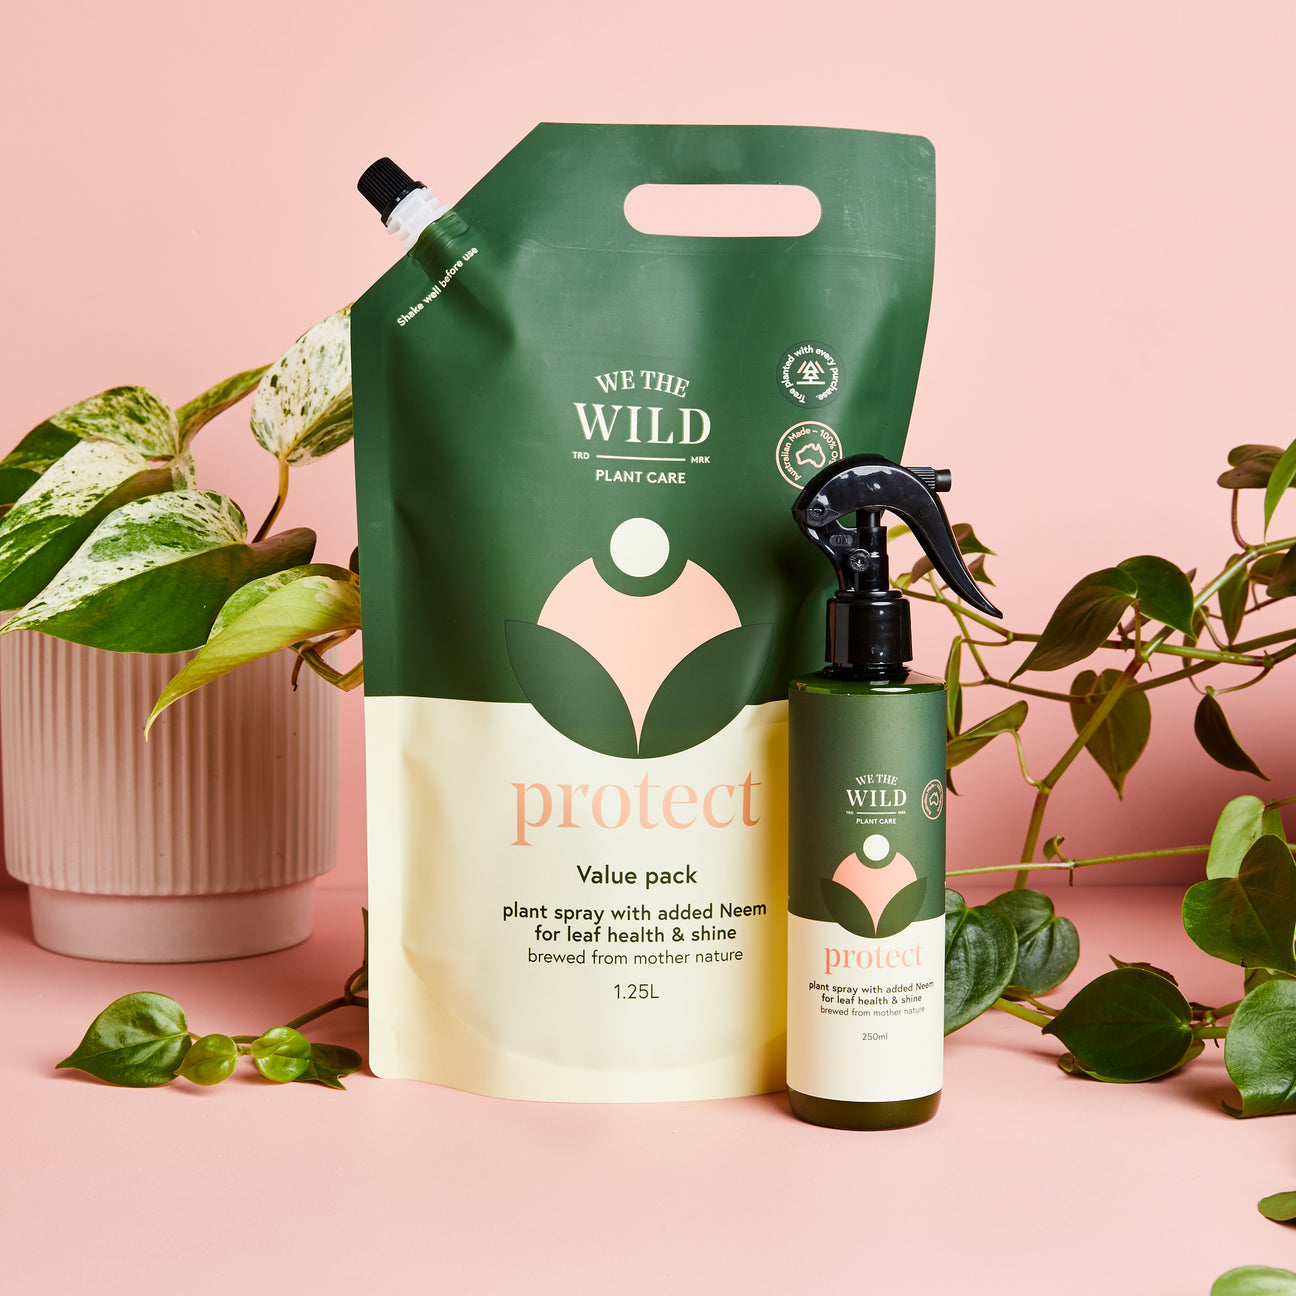 We The Wild Leaf Health Kit